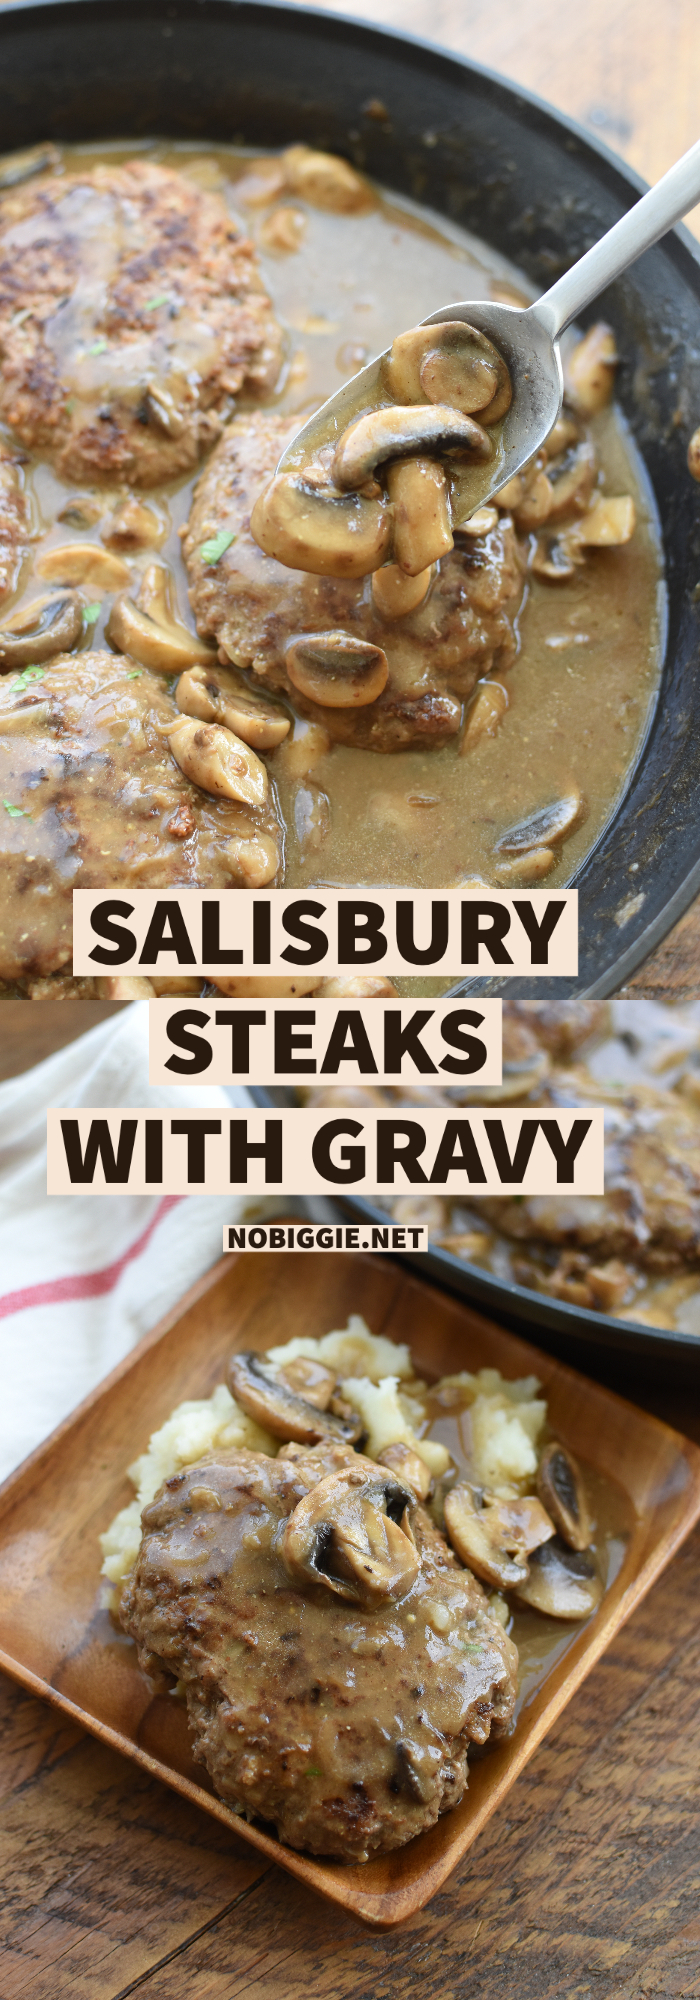 salisbury steaks with gravy | NoBiggie.net